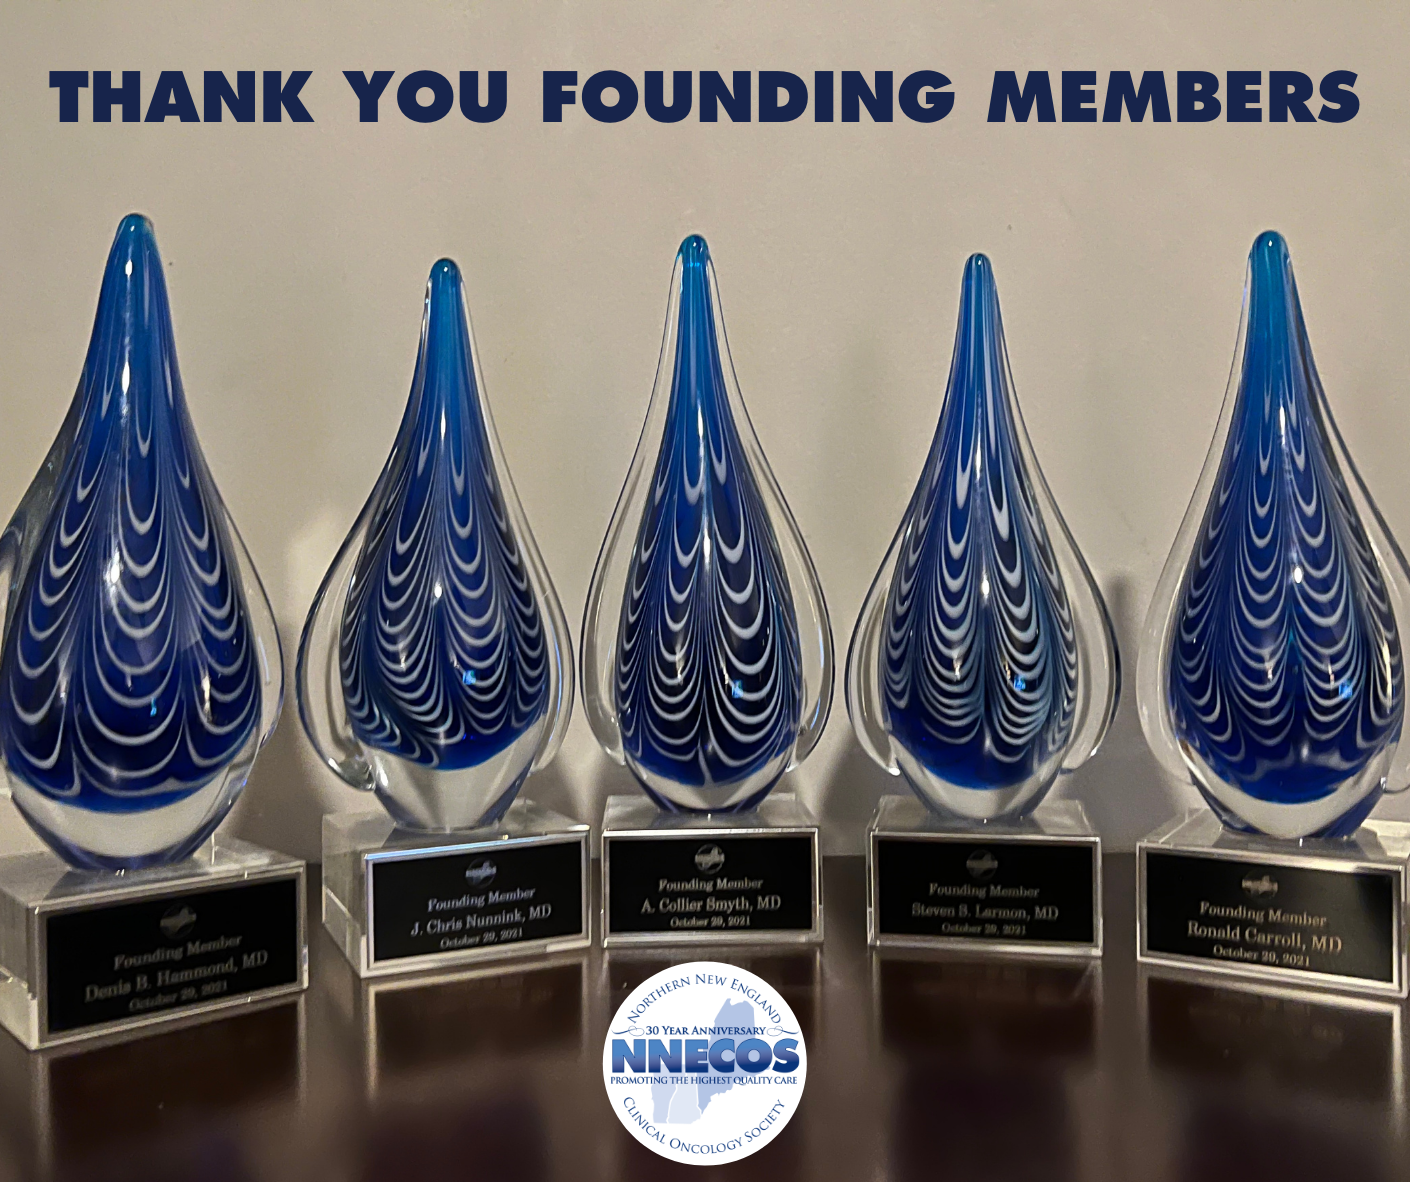 Thank you founding members